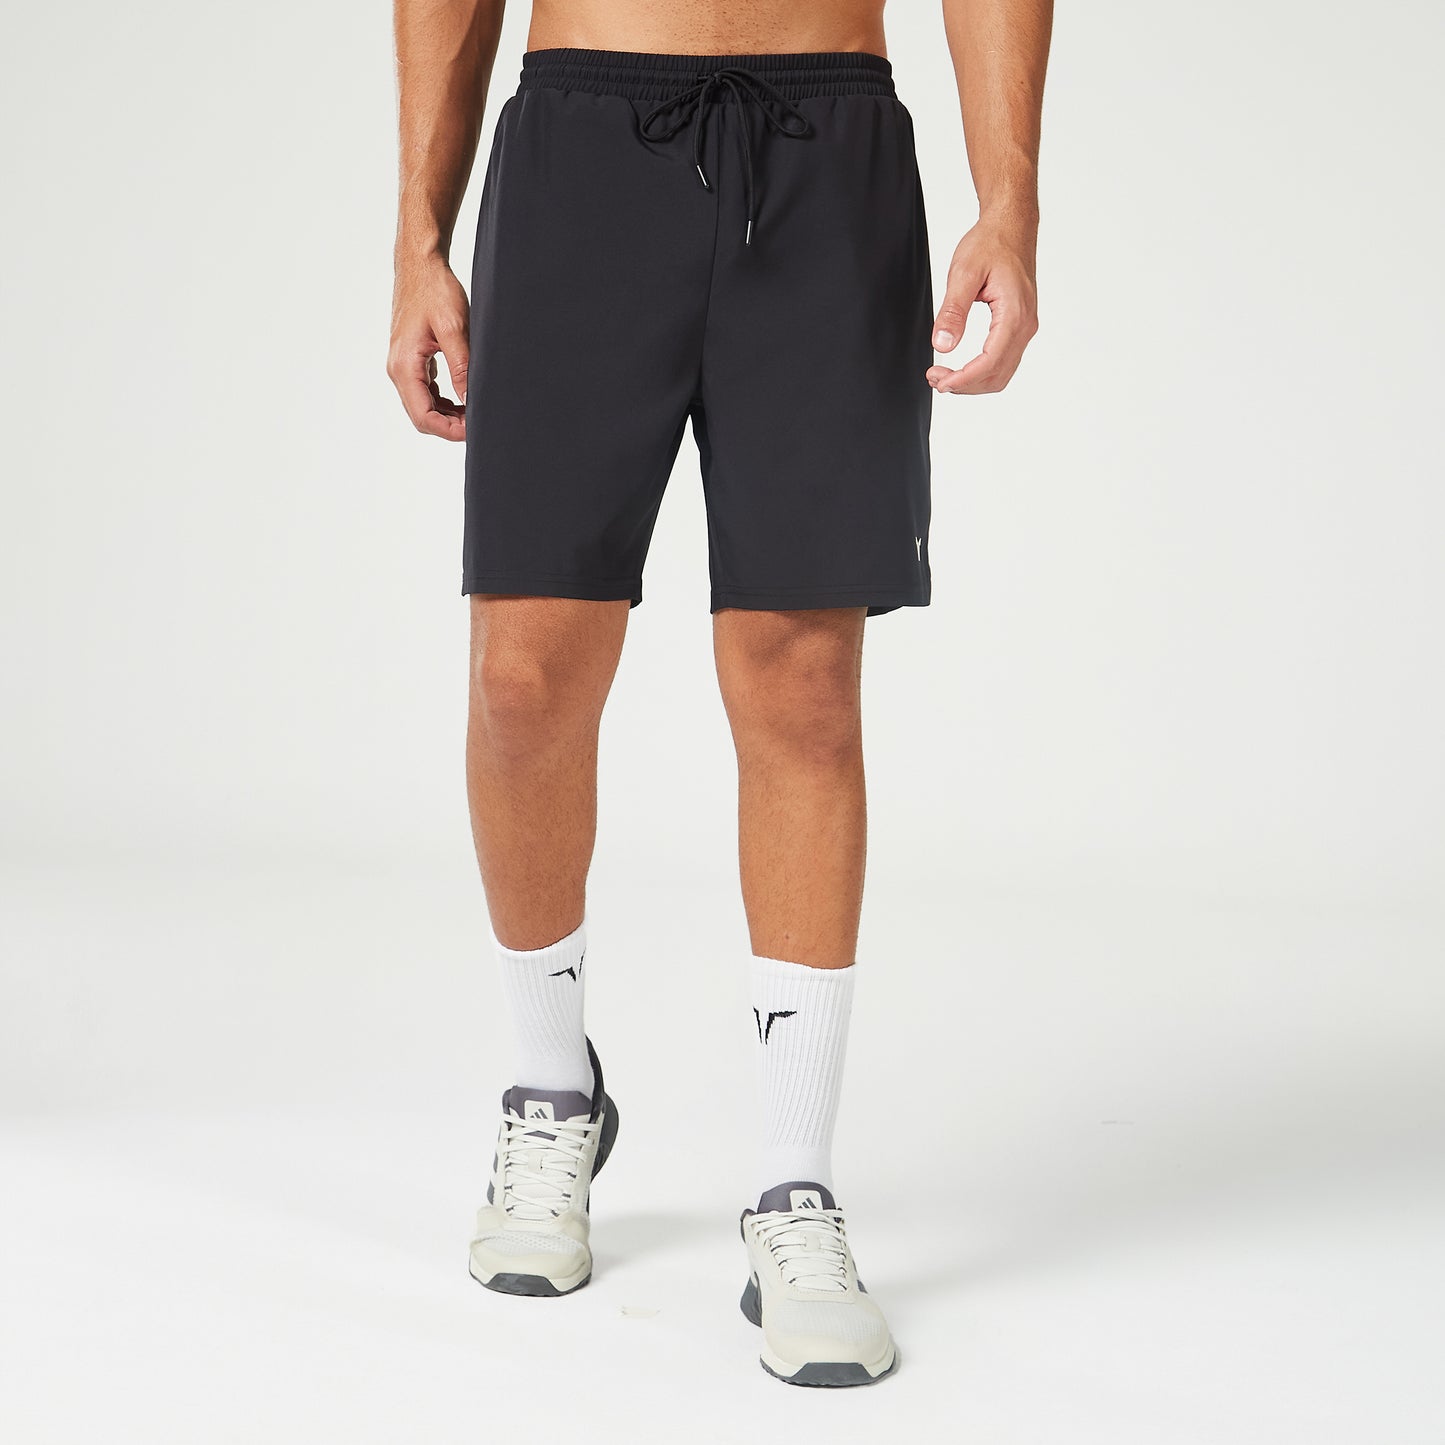 Essential 7" Shorts 2.0 - Black